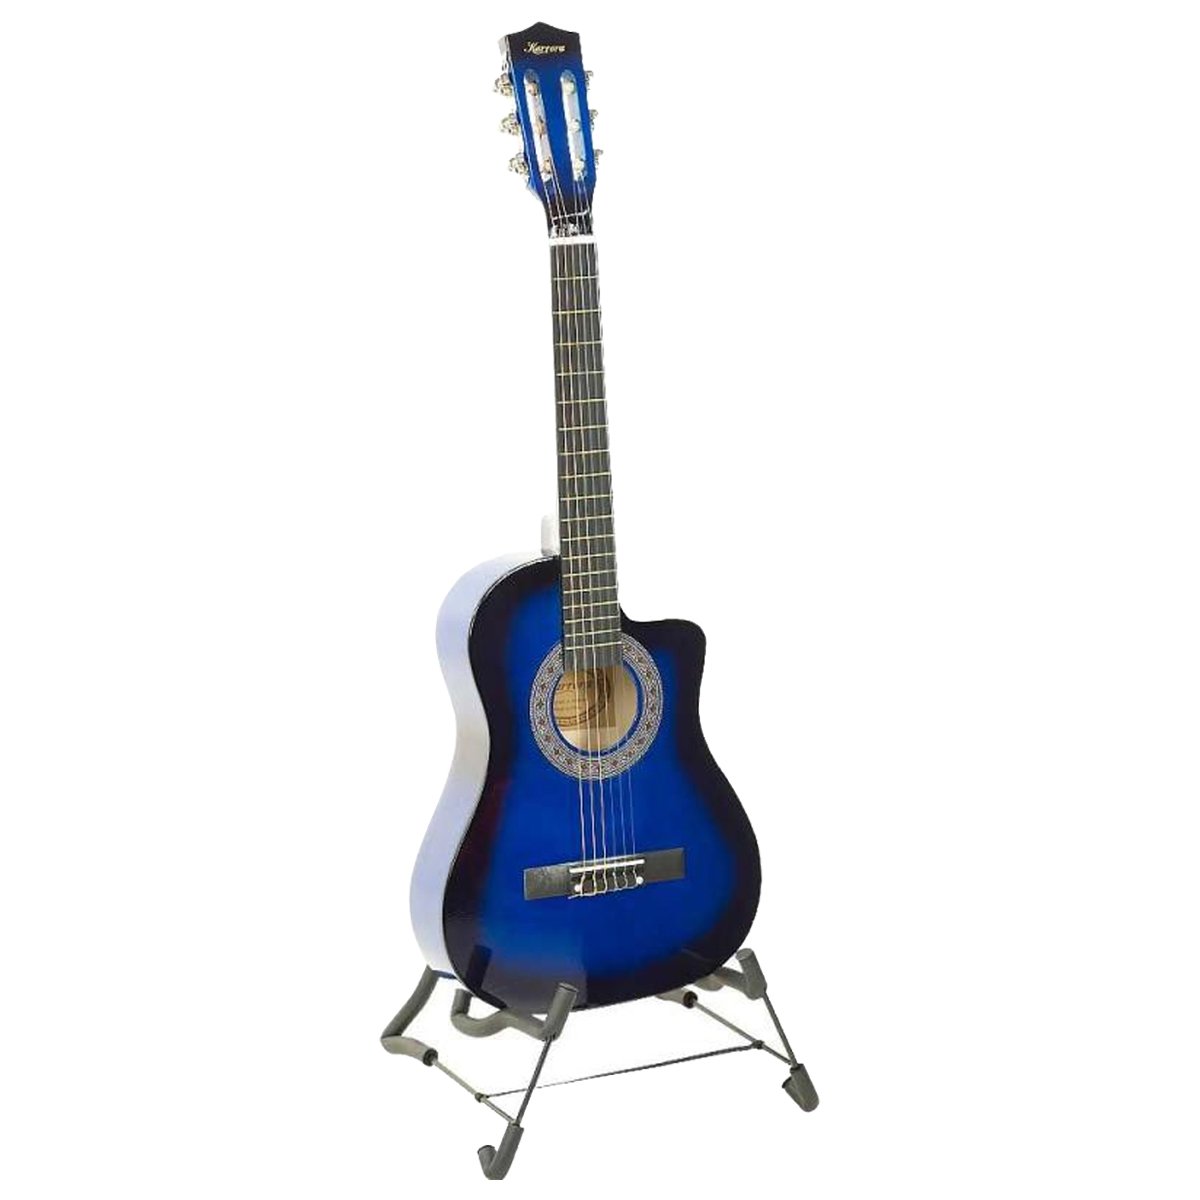 Karrera 38in Pro Cutaway Acoustic Guitar with Bag Strings - Blue Burst - SILBERSHELL